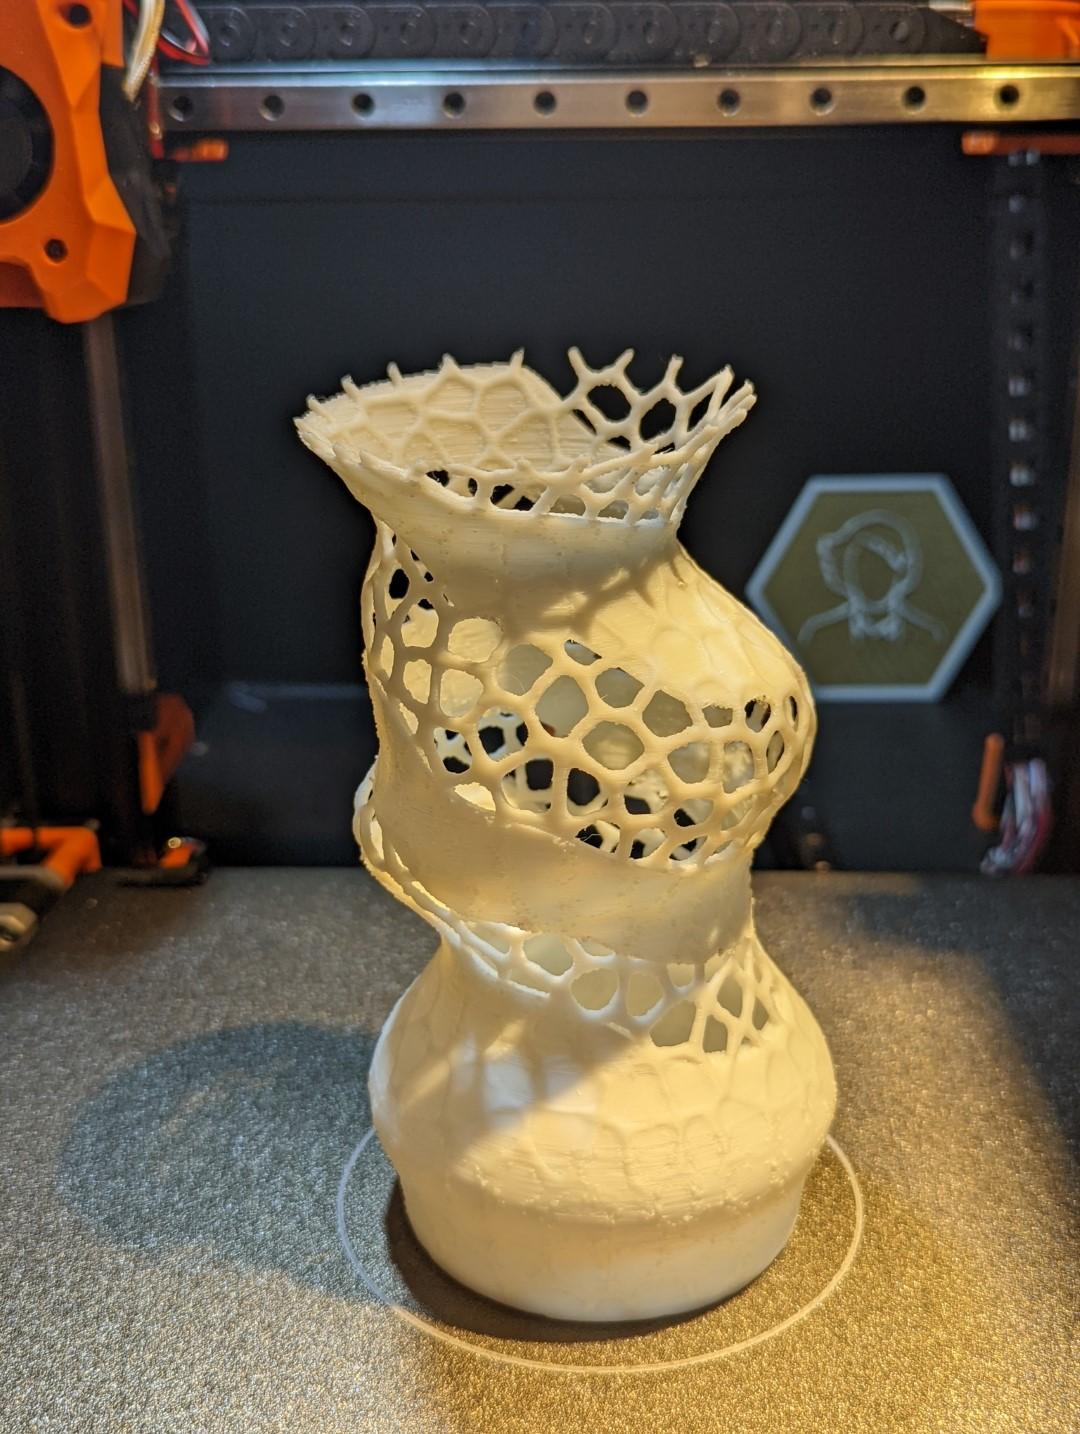 Wobbly Voronoi Vase 3d model